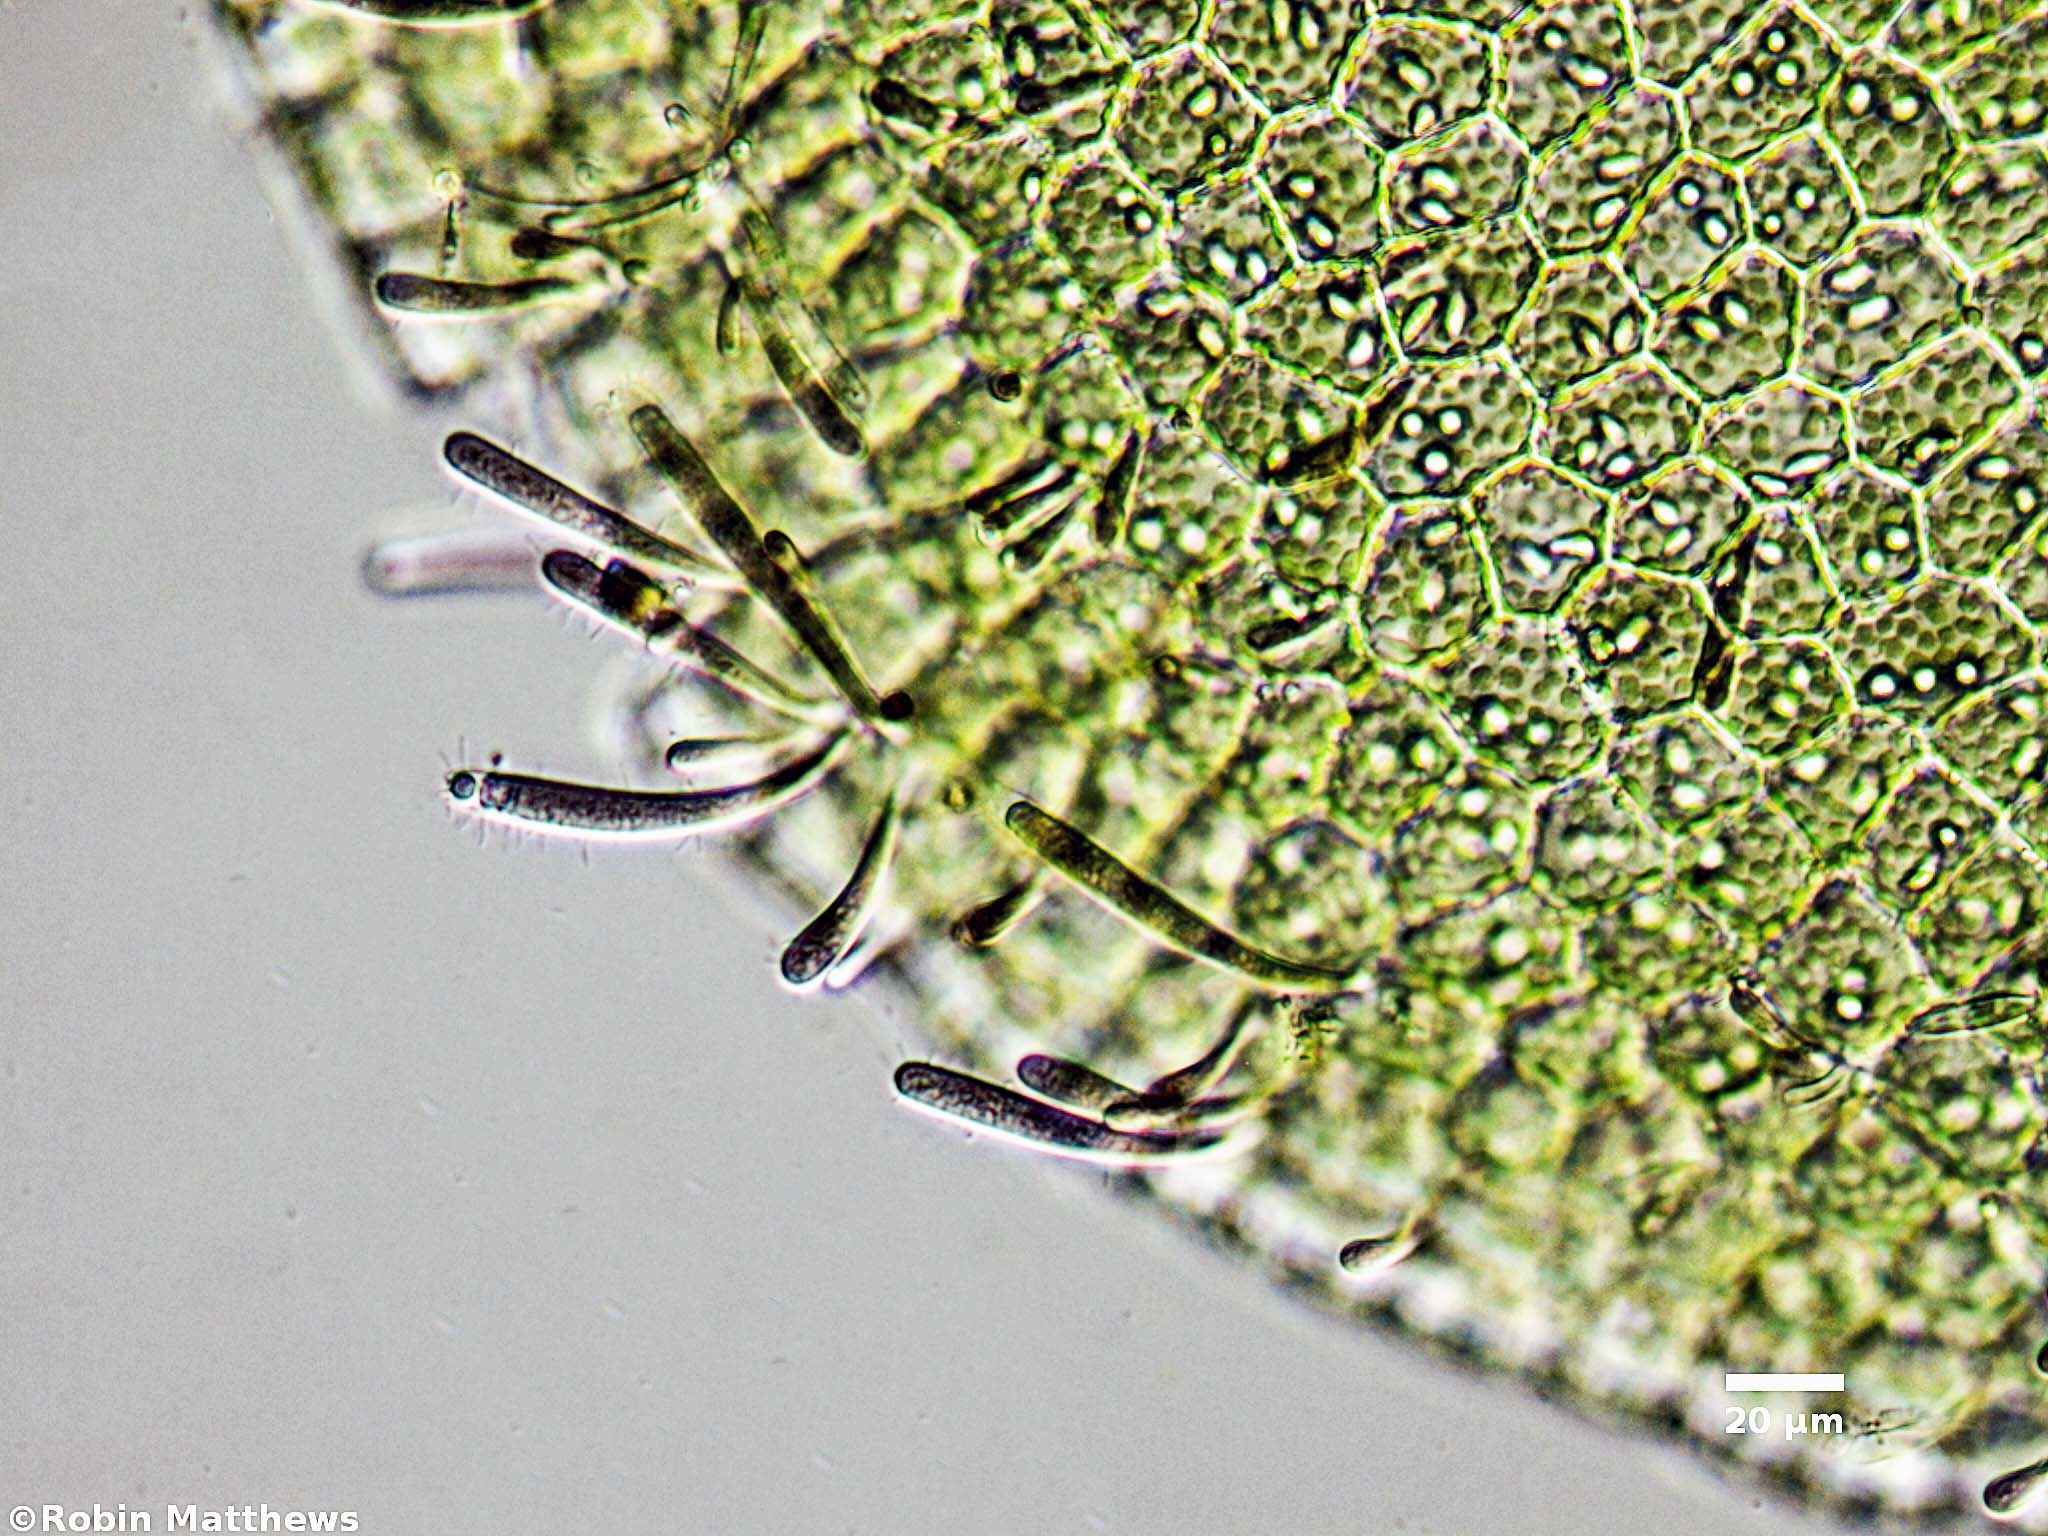 Cyanobacteria/Synechococcales/Chamaesiphonaceae/Chamaesiphon/convervicolus/chamaesiphon-convervicolus-76.jpg